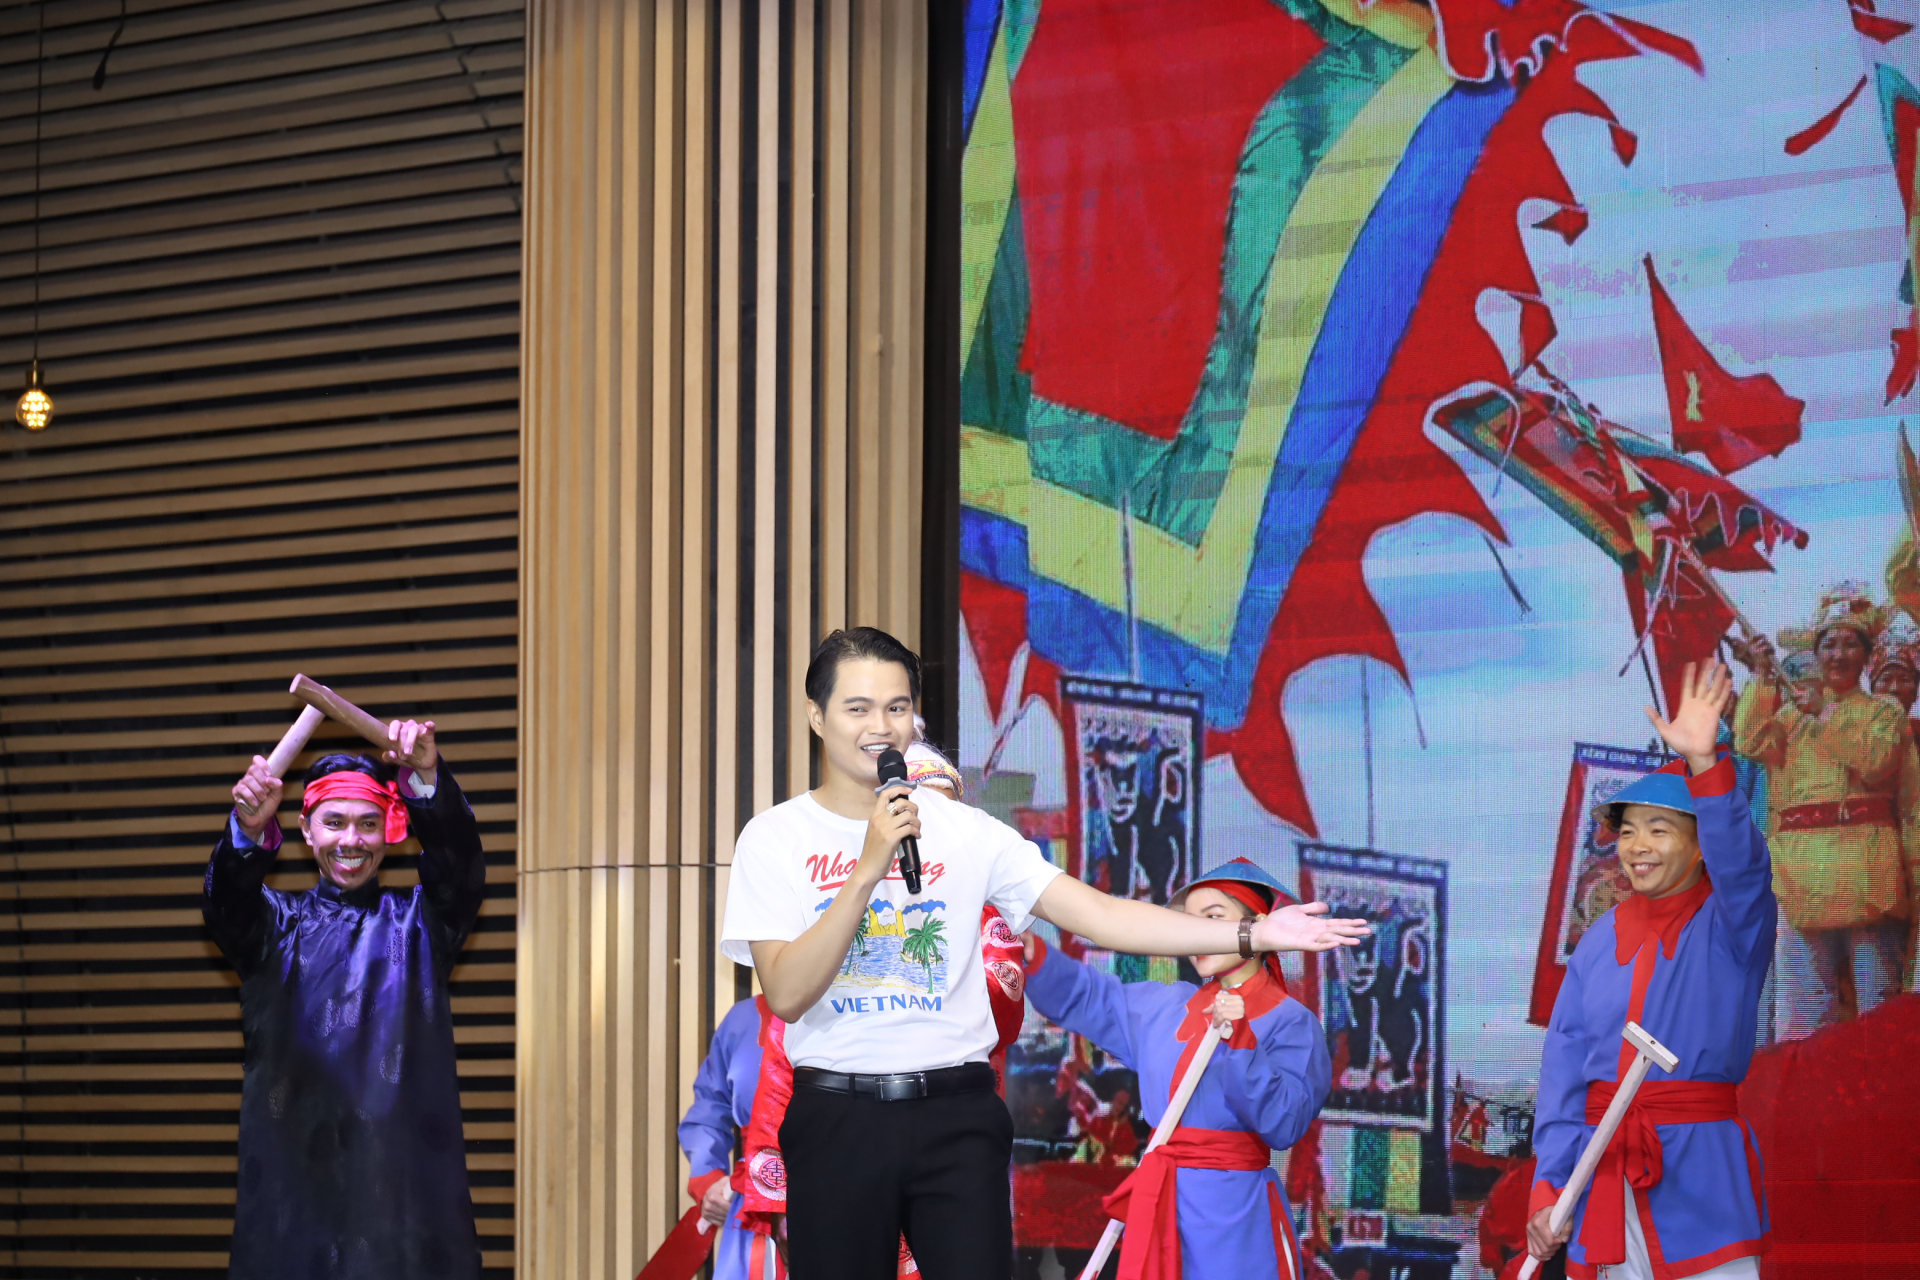 Trieu Phuc Nguyen (Ba Ria - Vung Tau Radio and Television Station) introducing about Ba Trao singing

